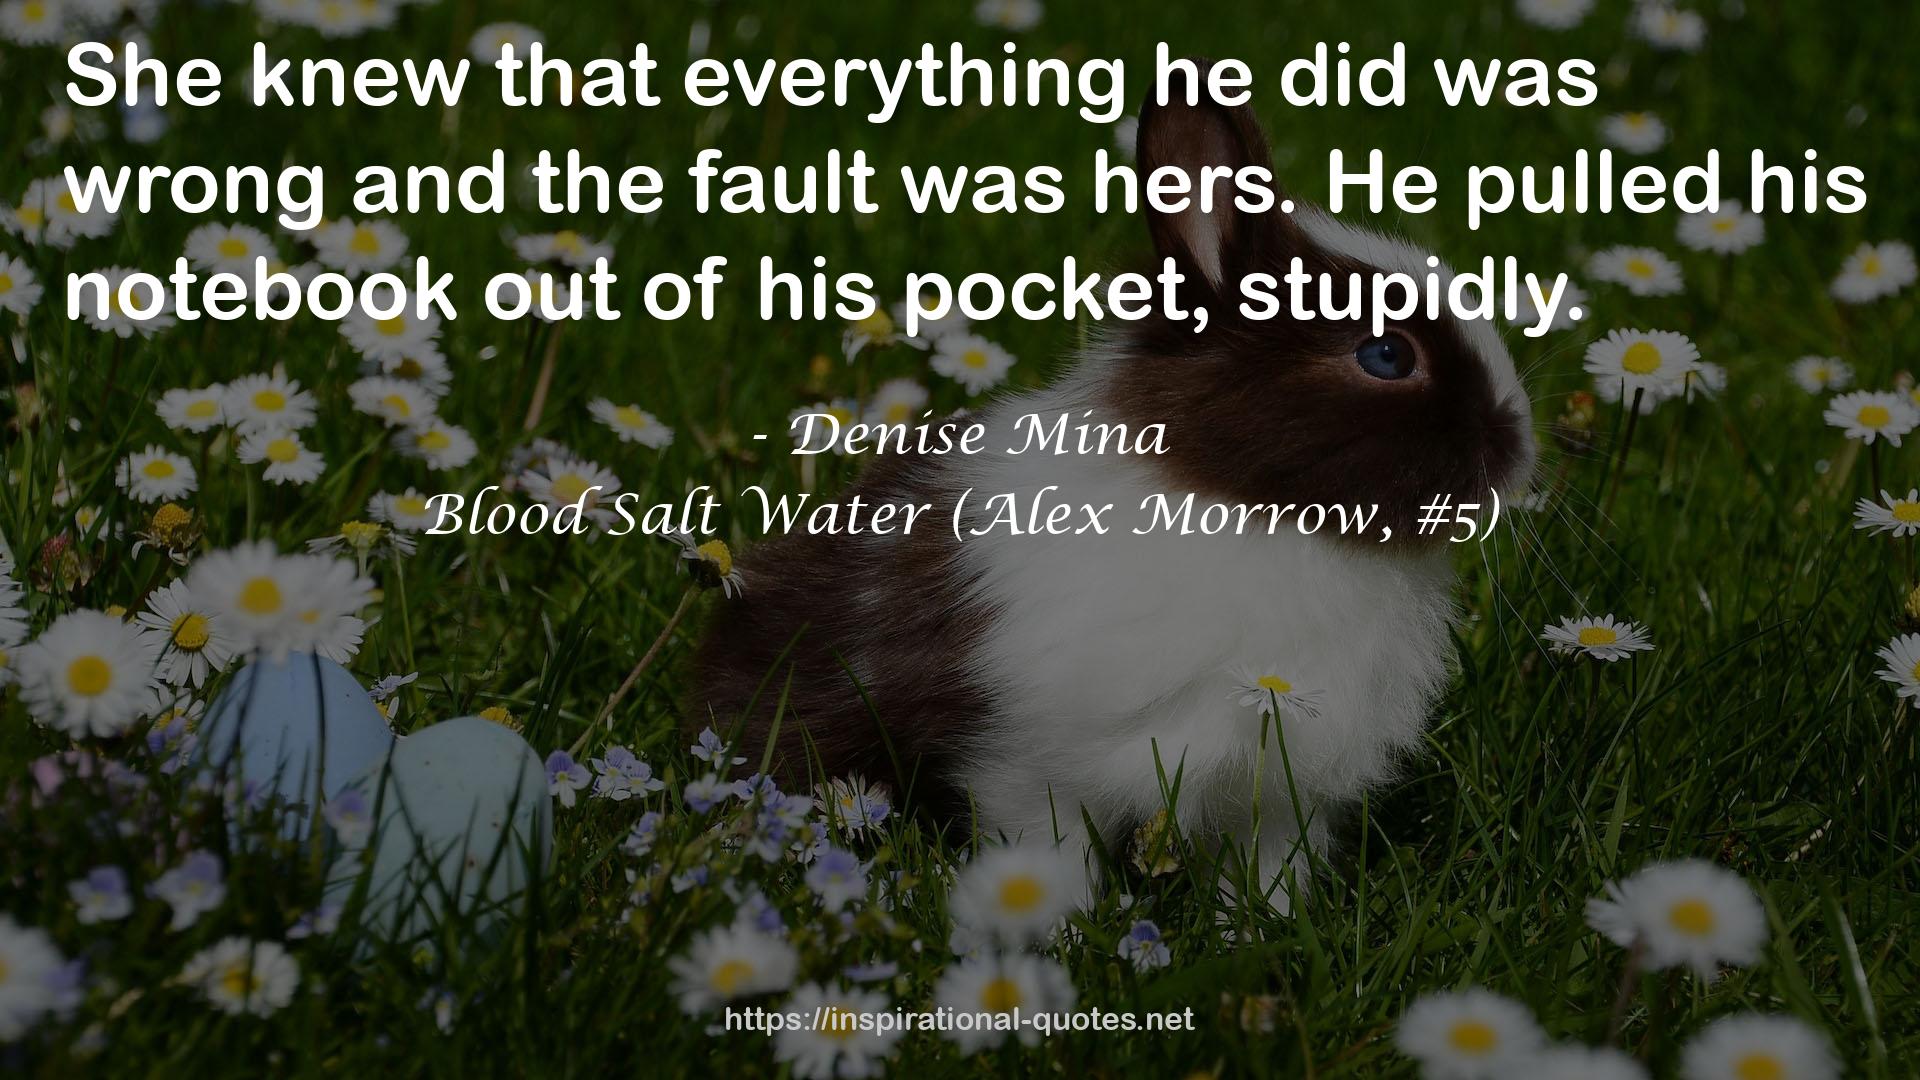 Blood Salt Water (Alex Morrow, #5) QUOTES